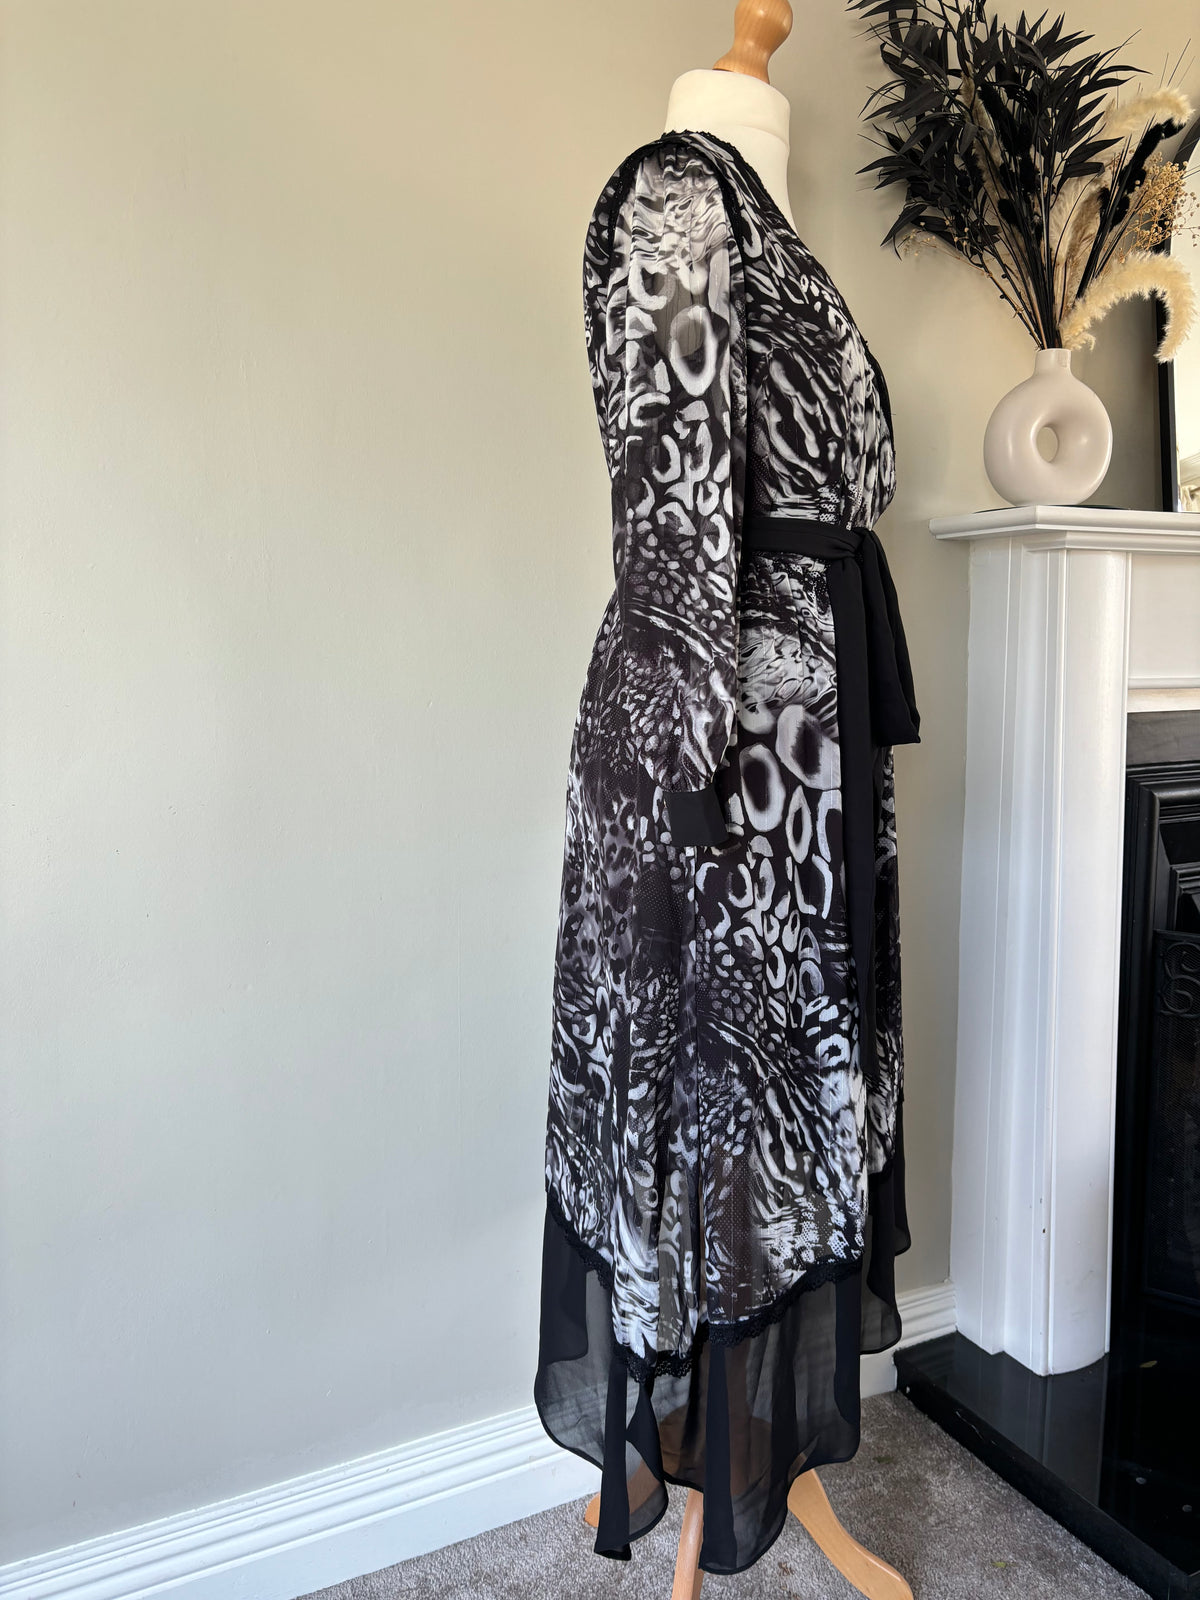 Mono Animal Print Mock Wrap Lace Trim Chiffon Dress by Kaleidoscope Size 14